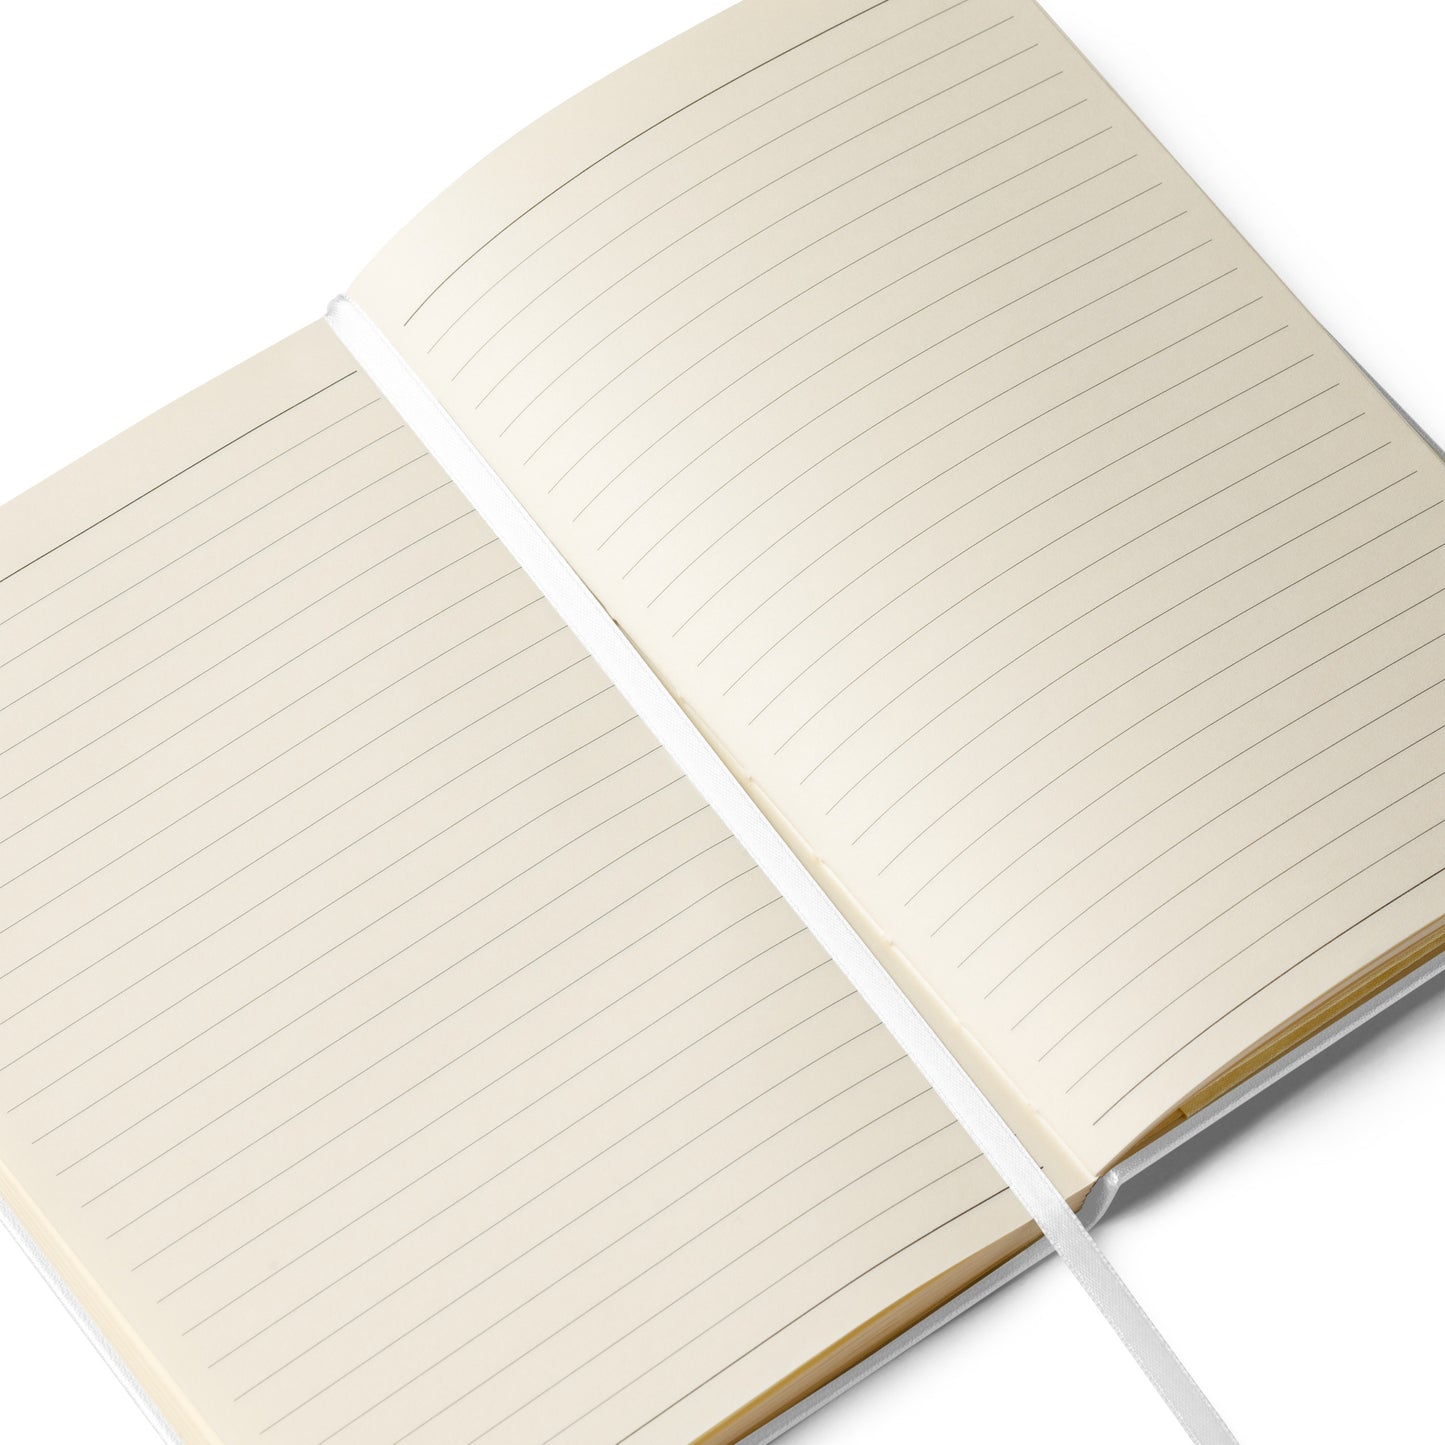 Aries Hardcover Bound Notebook